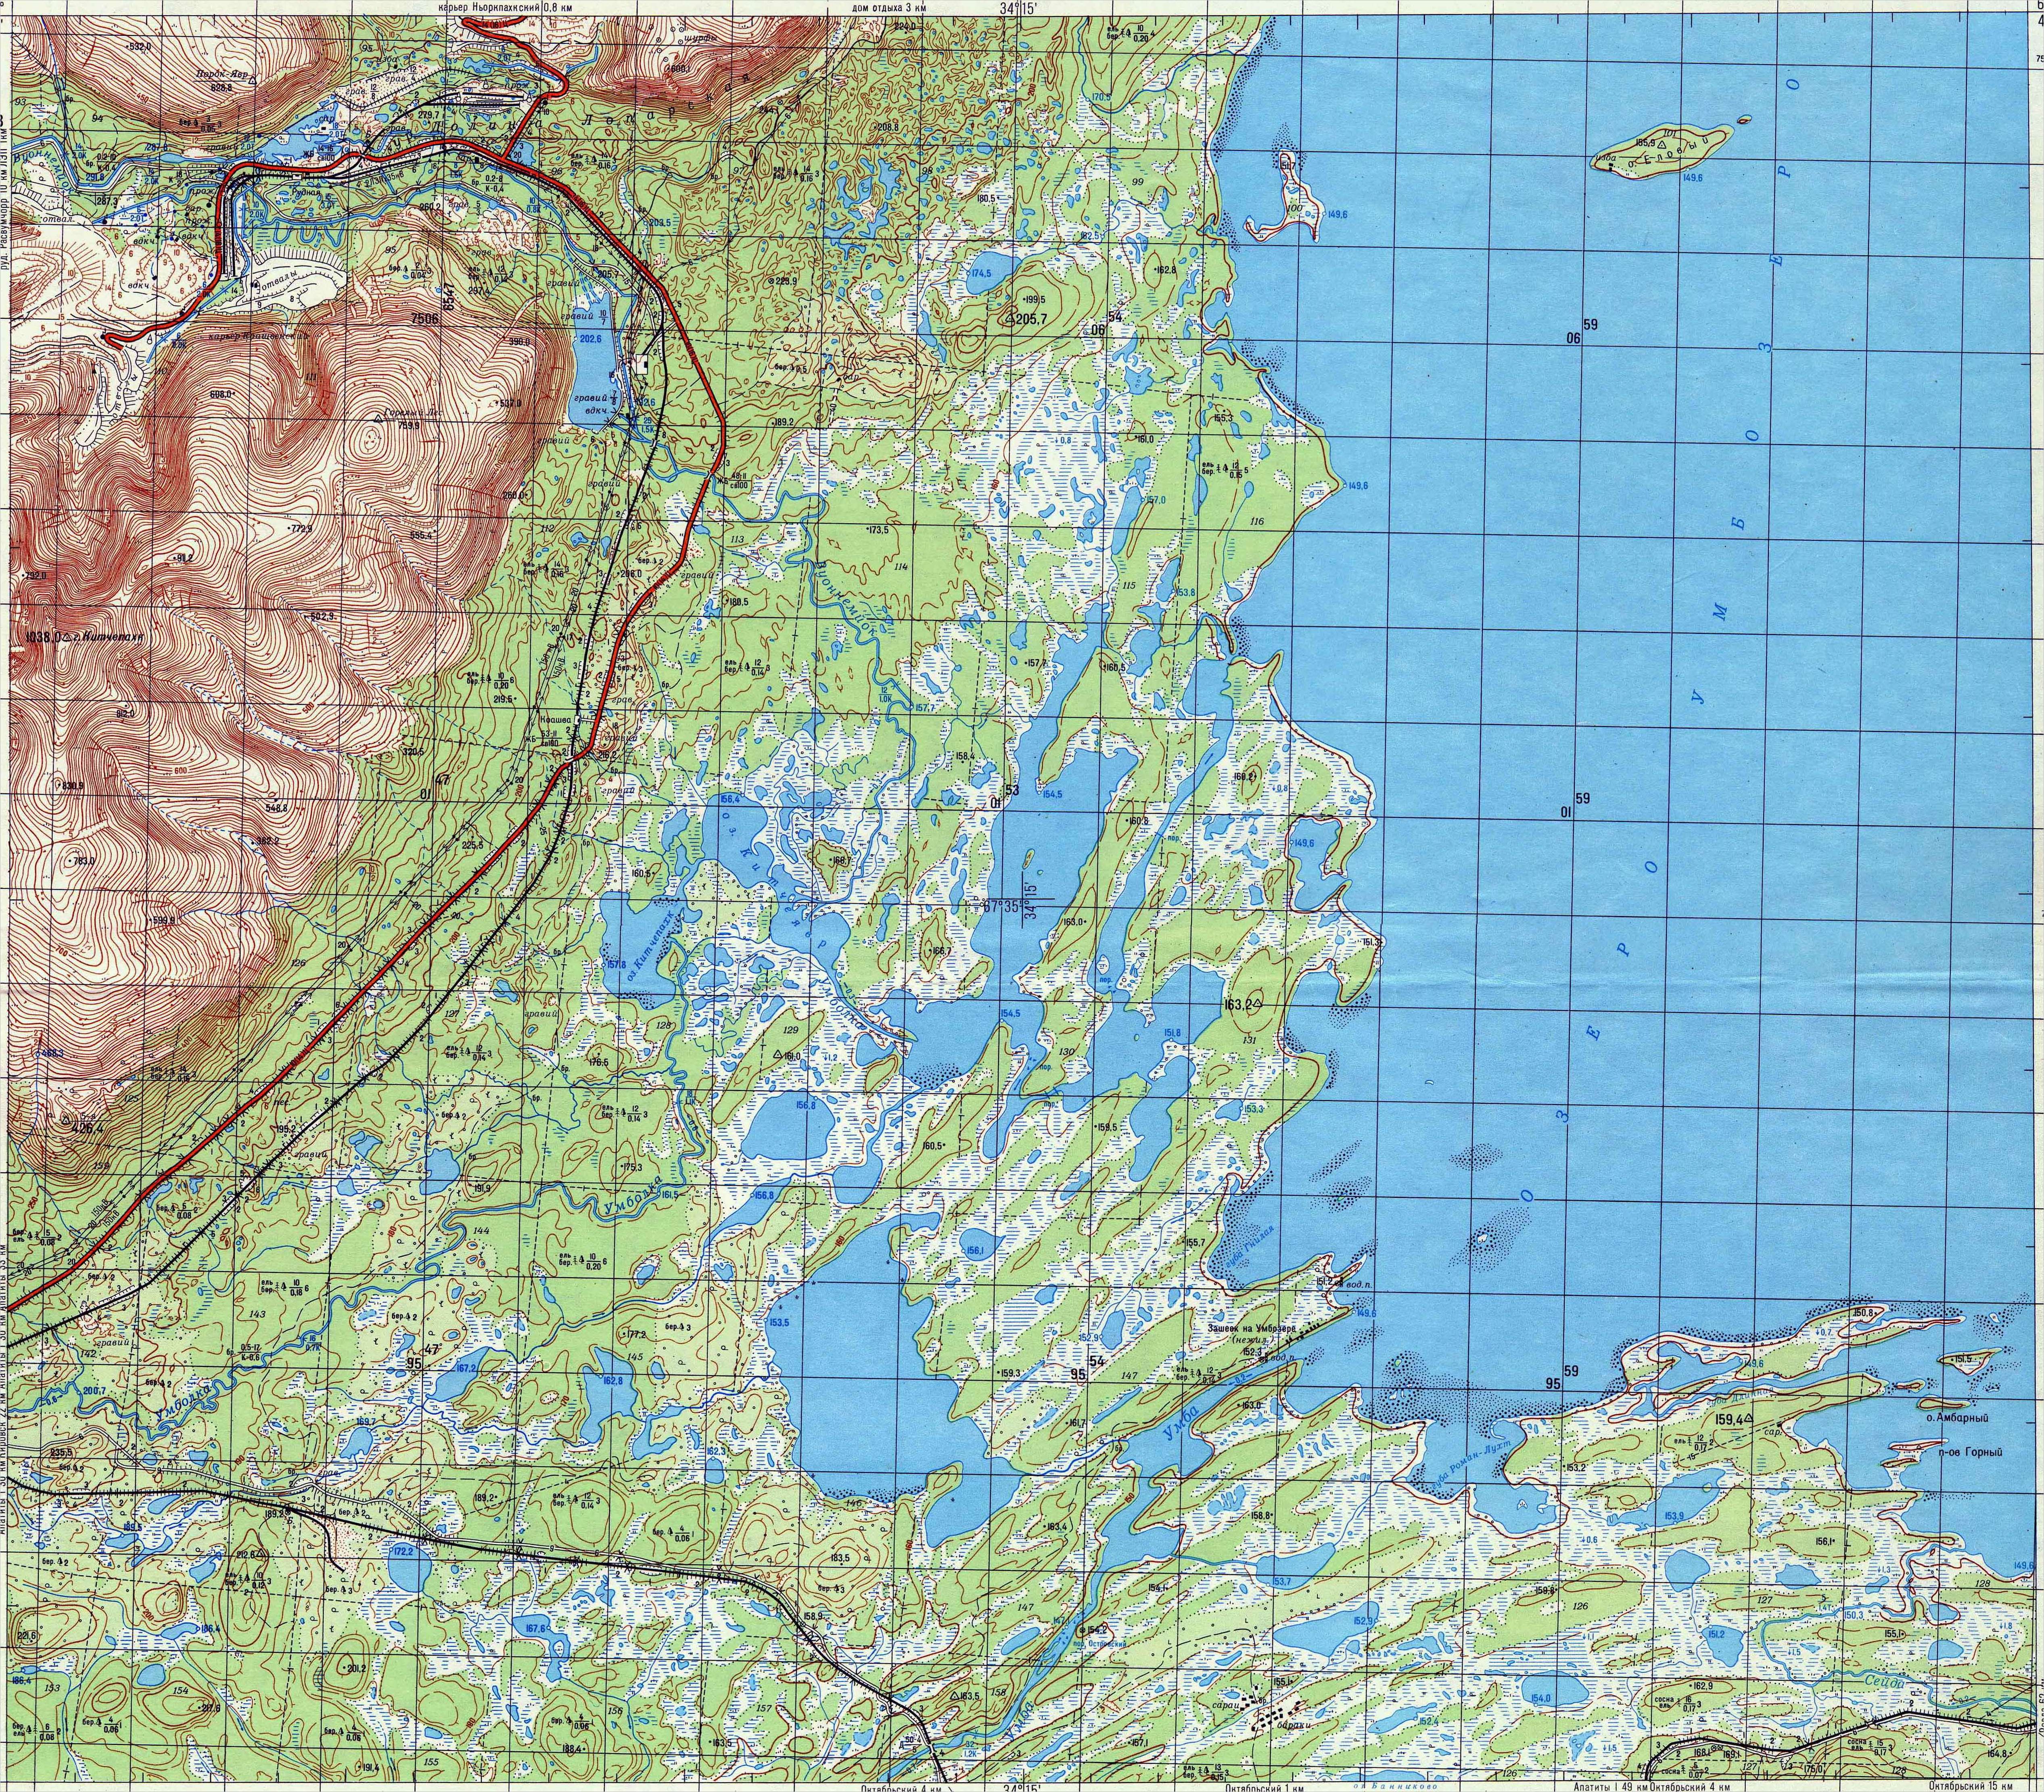 Map 18 - зашеек на ”мбозере - South-Western  End of the Umbozero Lake 